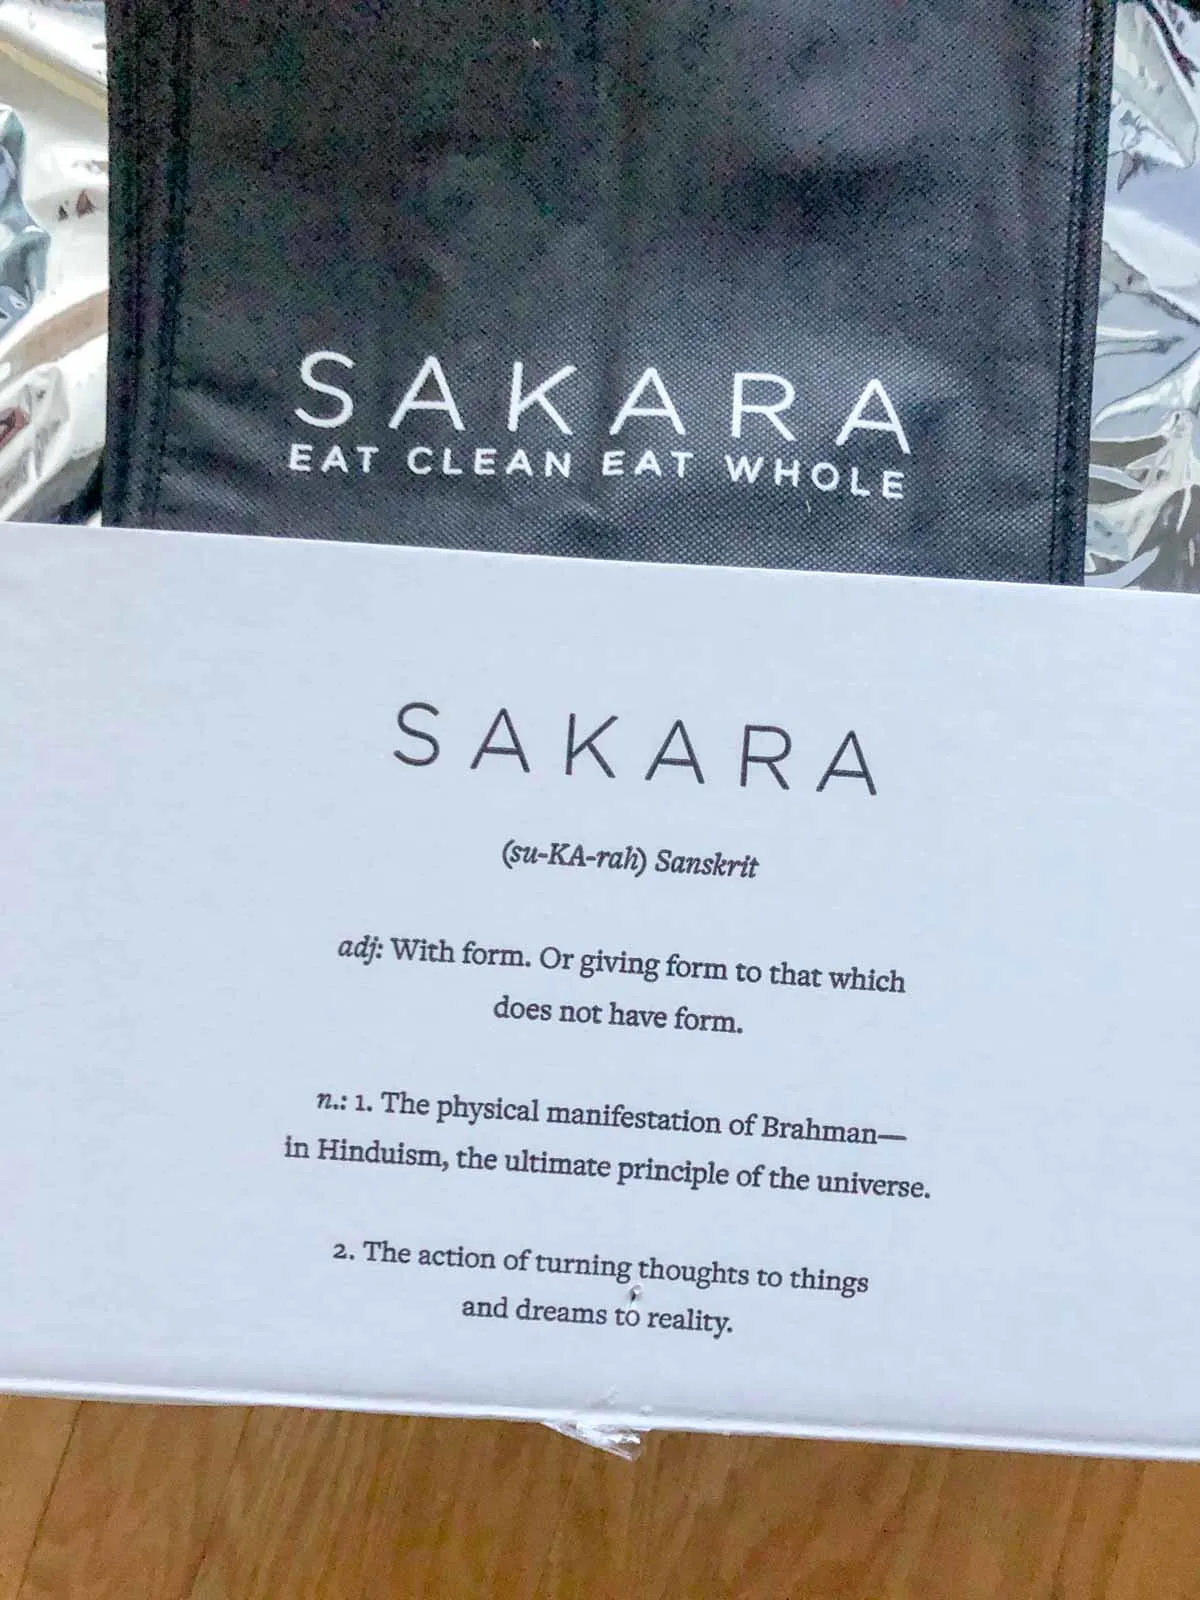 Sakara Life delivery box